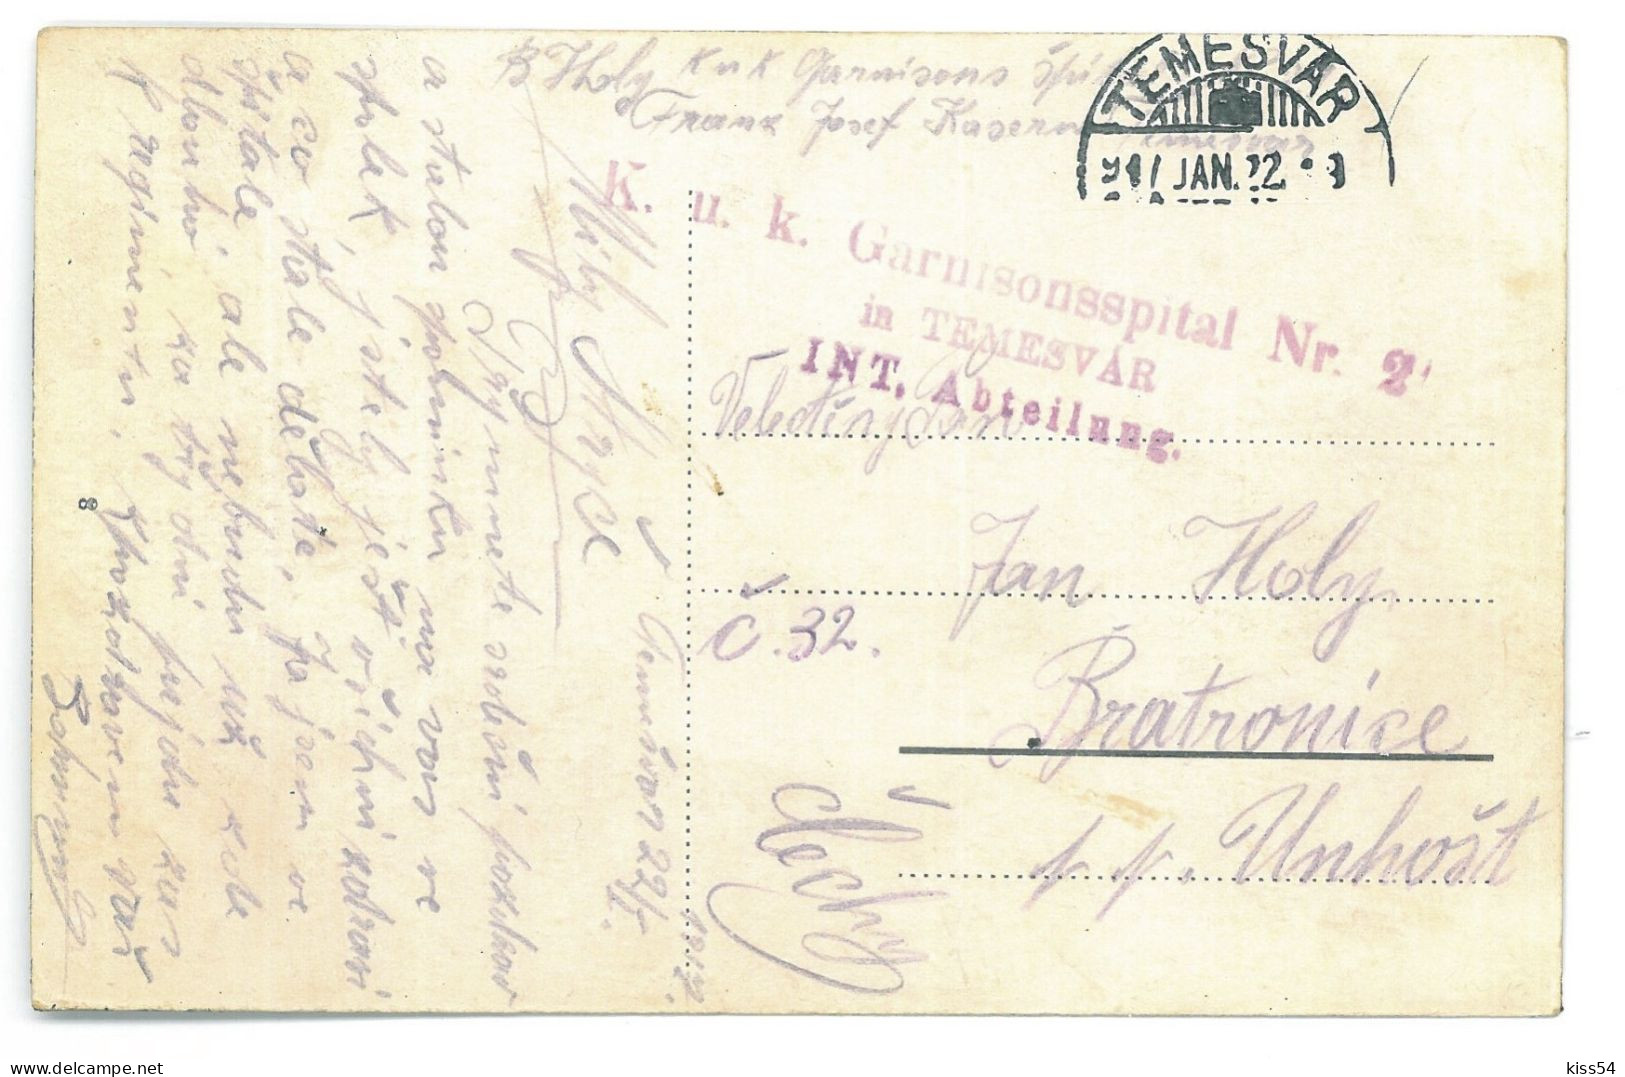 RO 91 - 25185 TIMISOARA, Market, Romania - Old Postcard, Hospital CENSOR - Used - 1917 - Roumanie